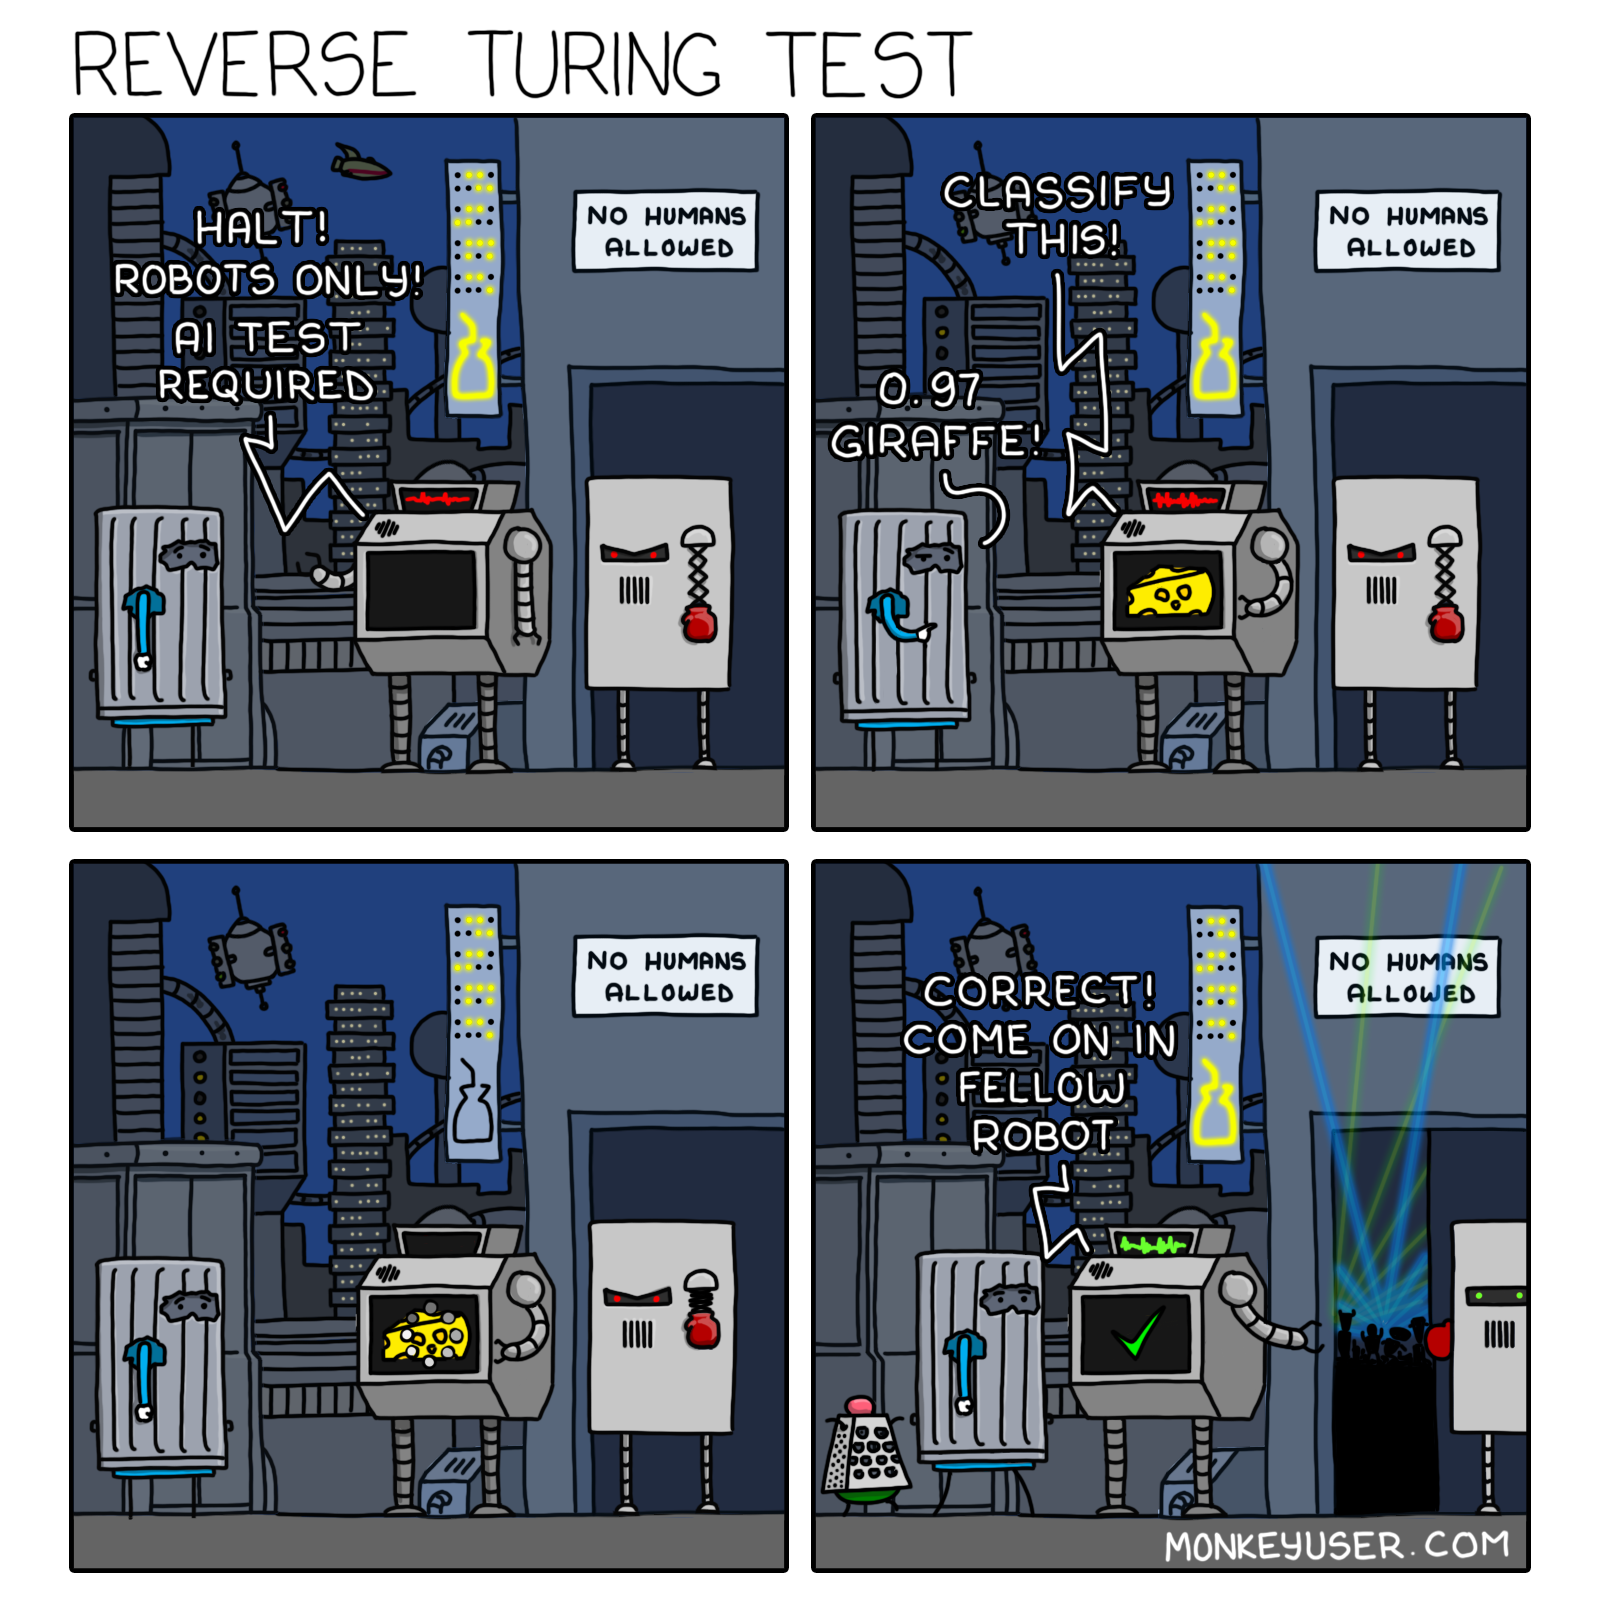 Reverse Turing Test